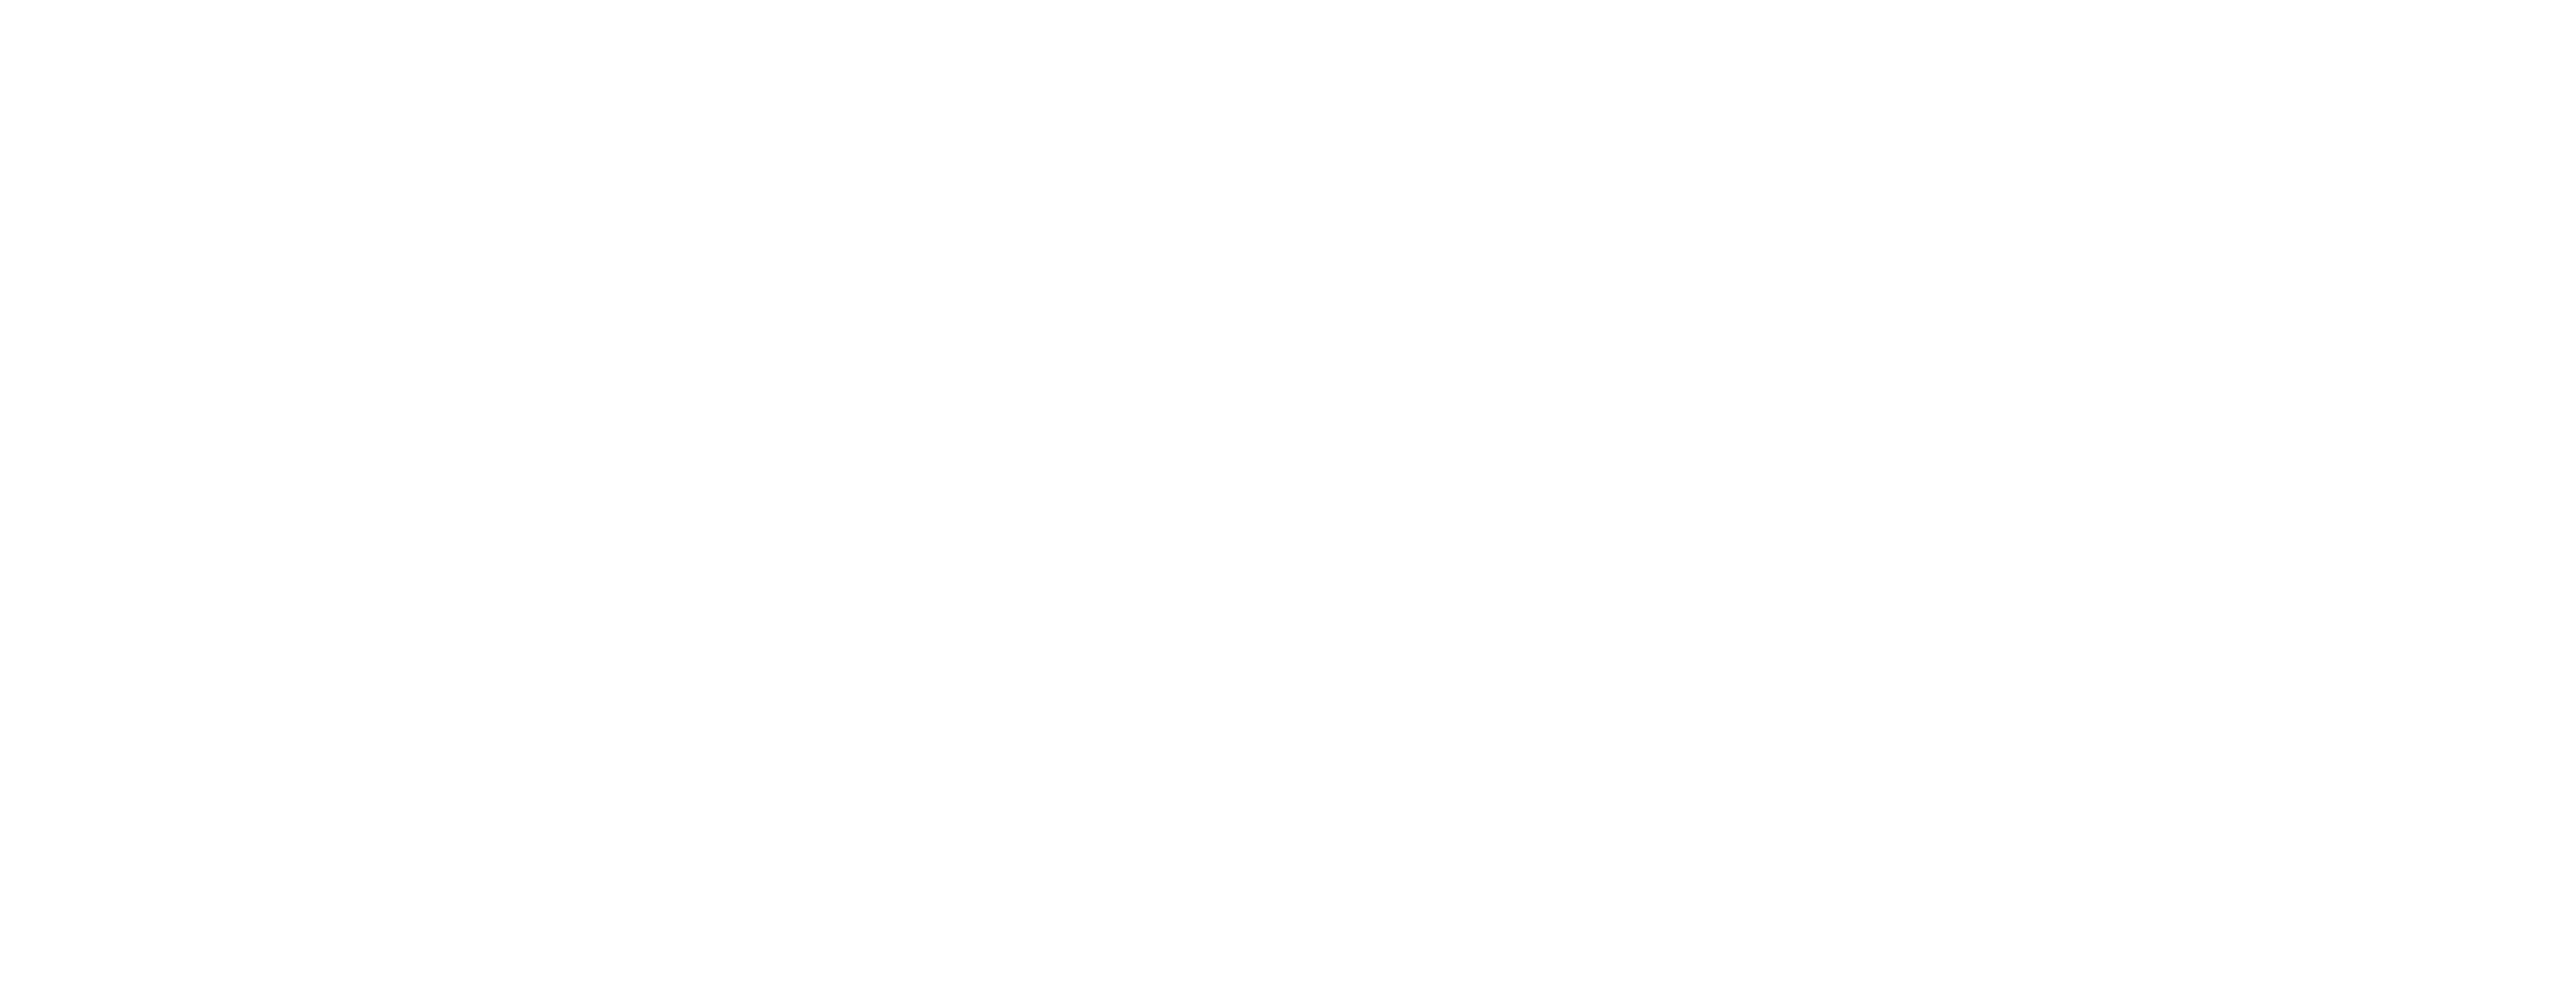 Sharpshaft Logotype